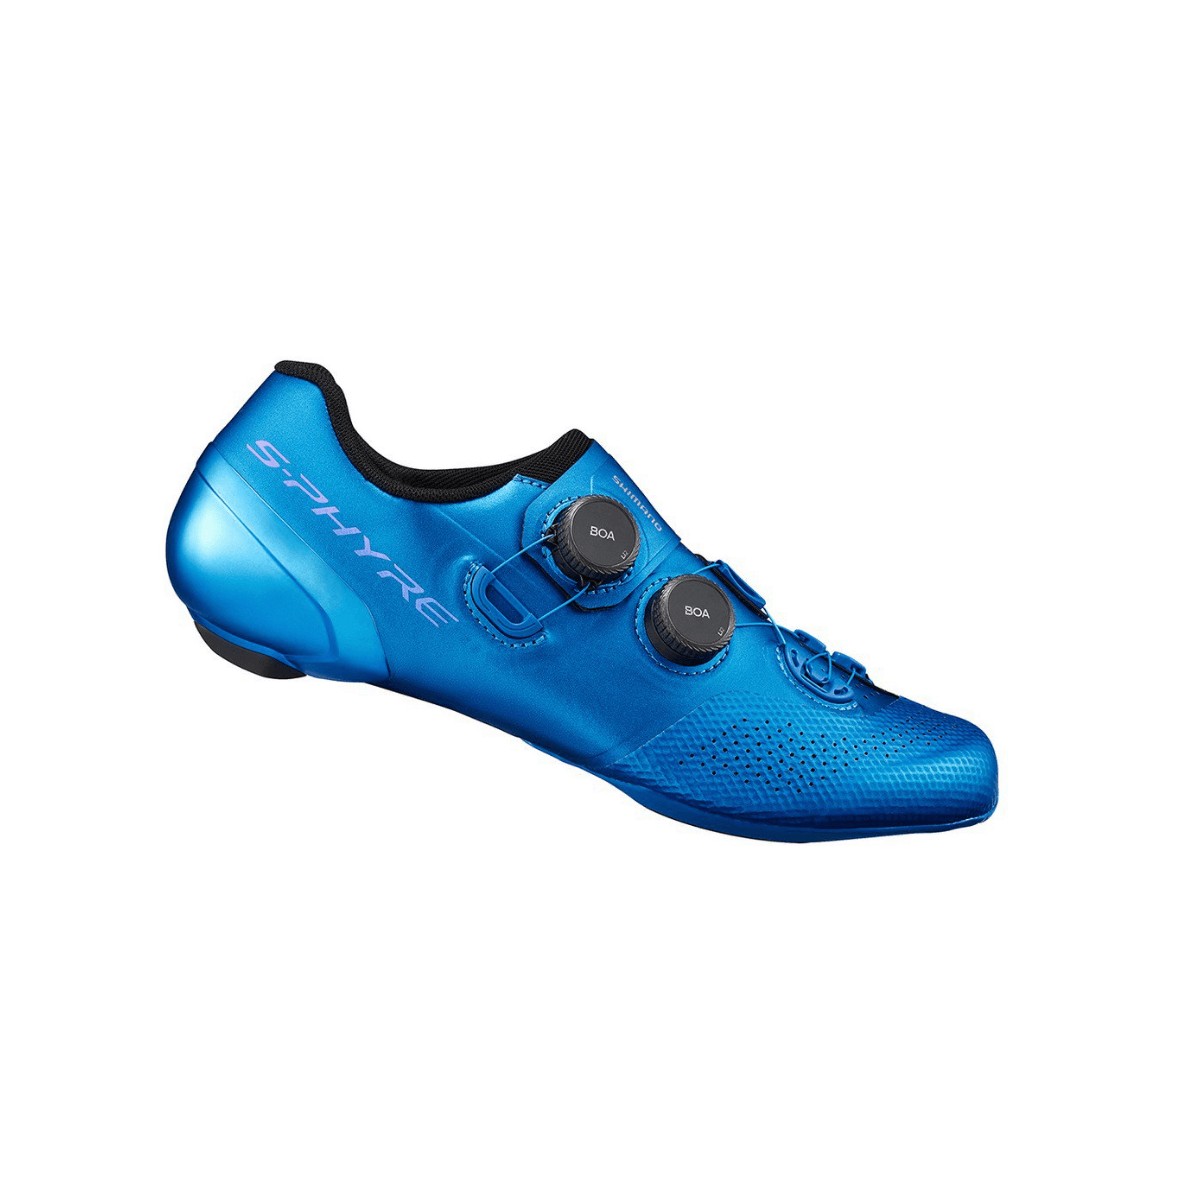 Shimano RC902 S-PHYRE Shoes Blue, Size 45 - EUR